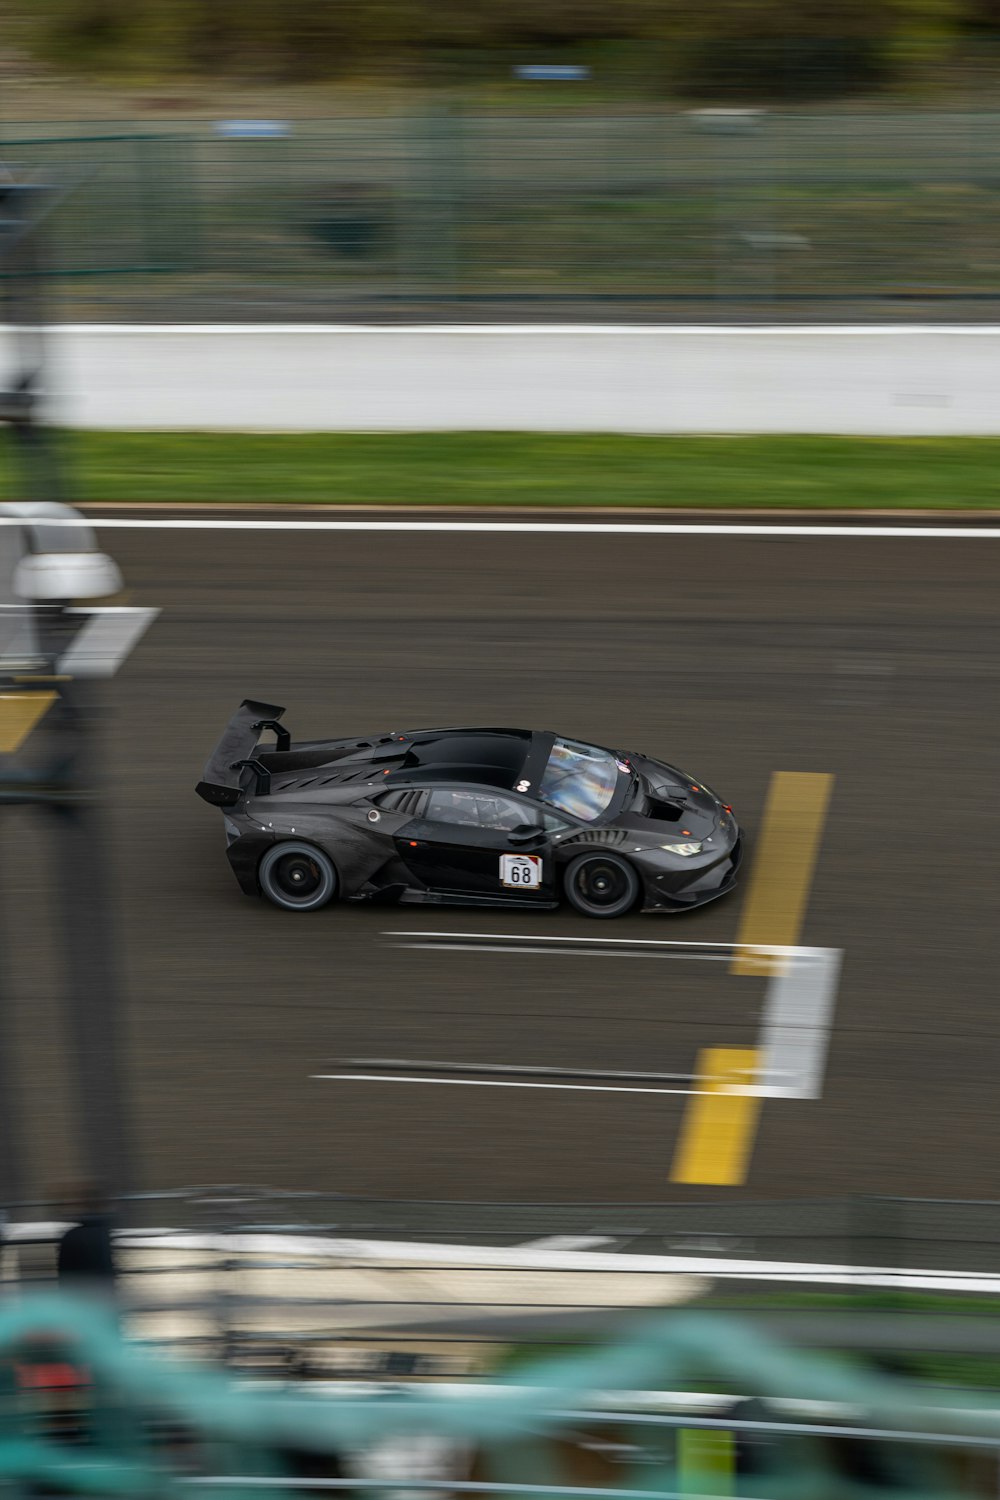 a black race car driving down a race track